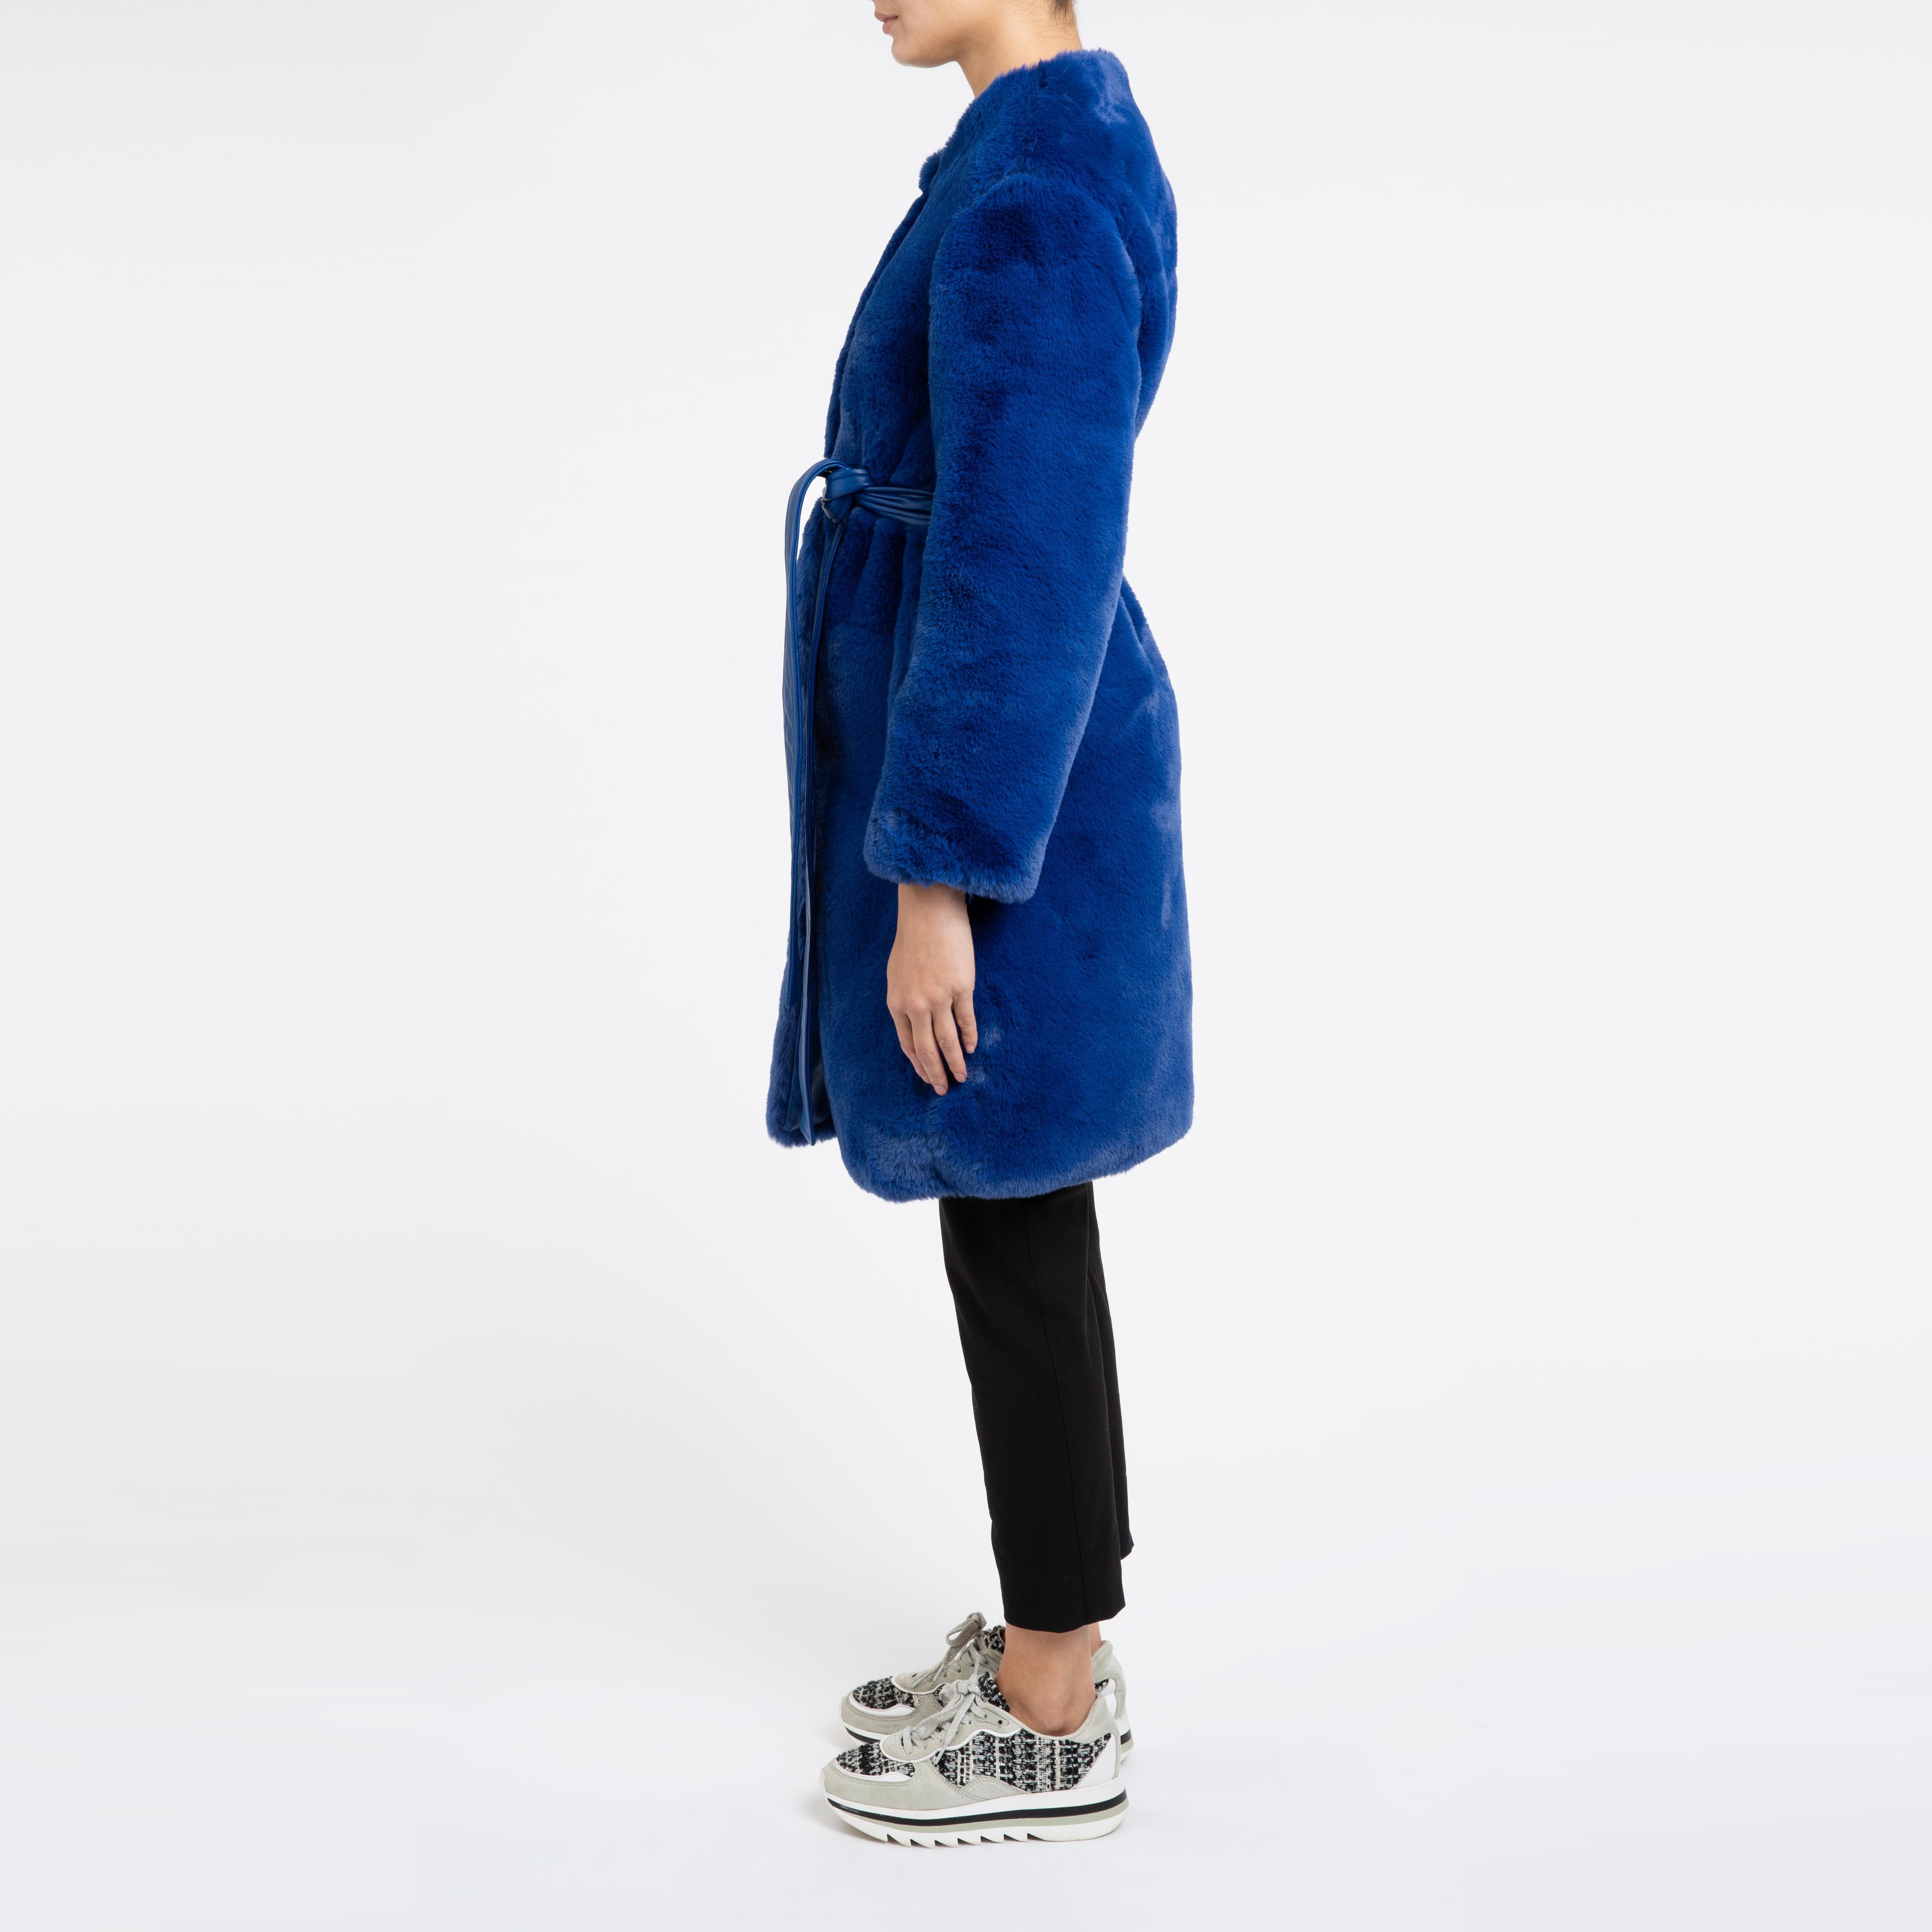 Verheyen London Serena  Collarless Faux Fur Coat in Blue - Size uk 10 For Sale 4